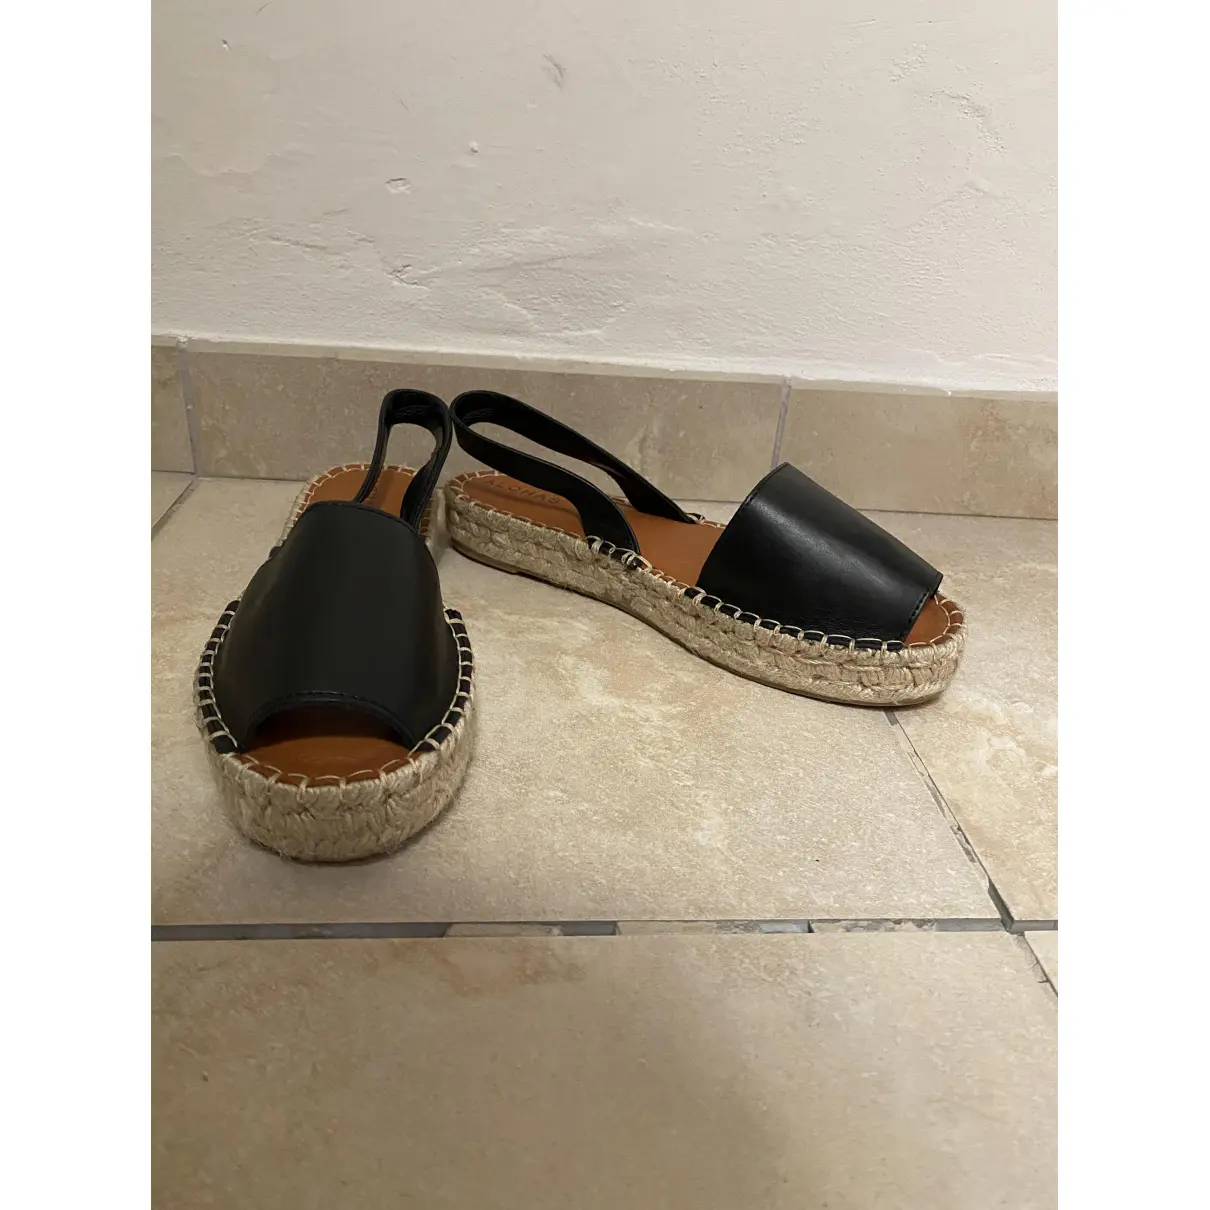 Buy Alohas Leather sandal online